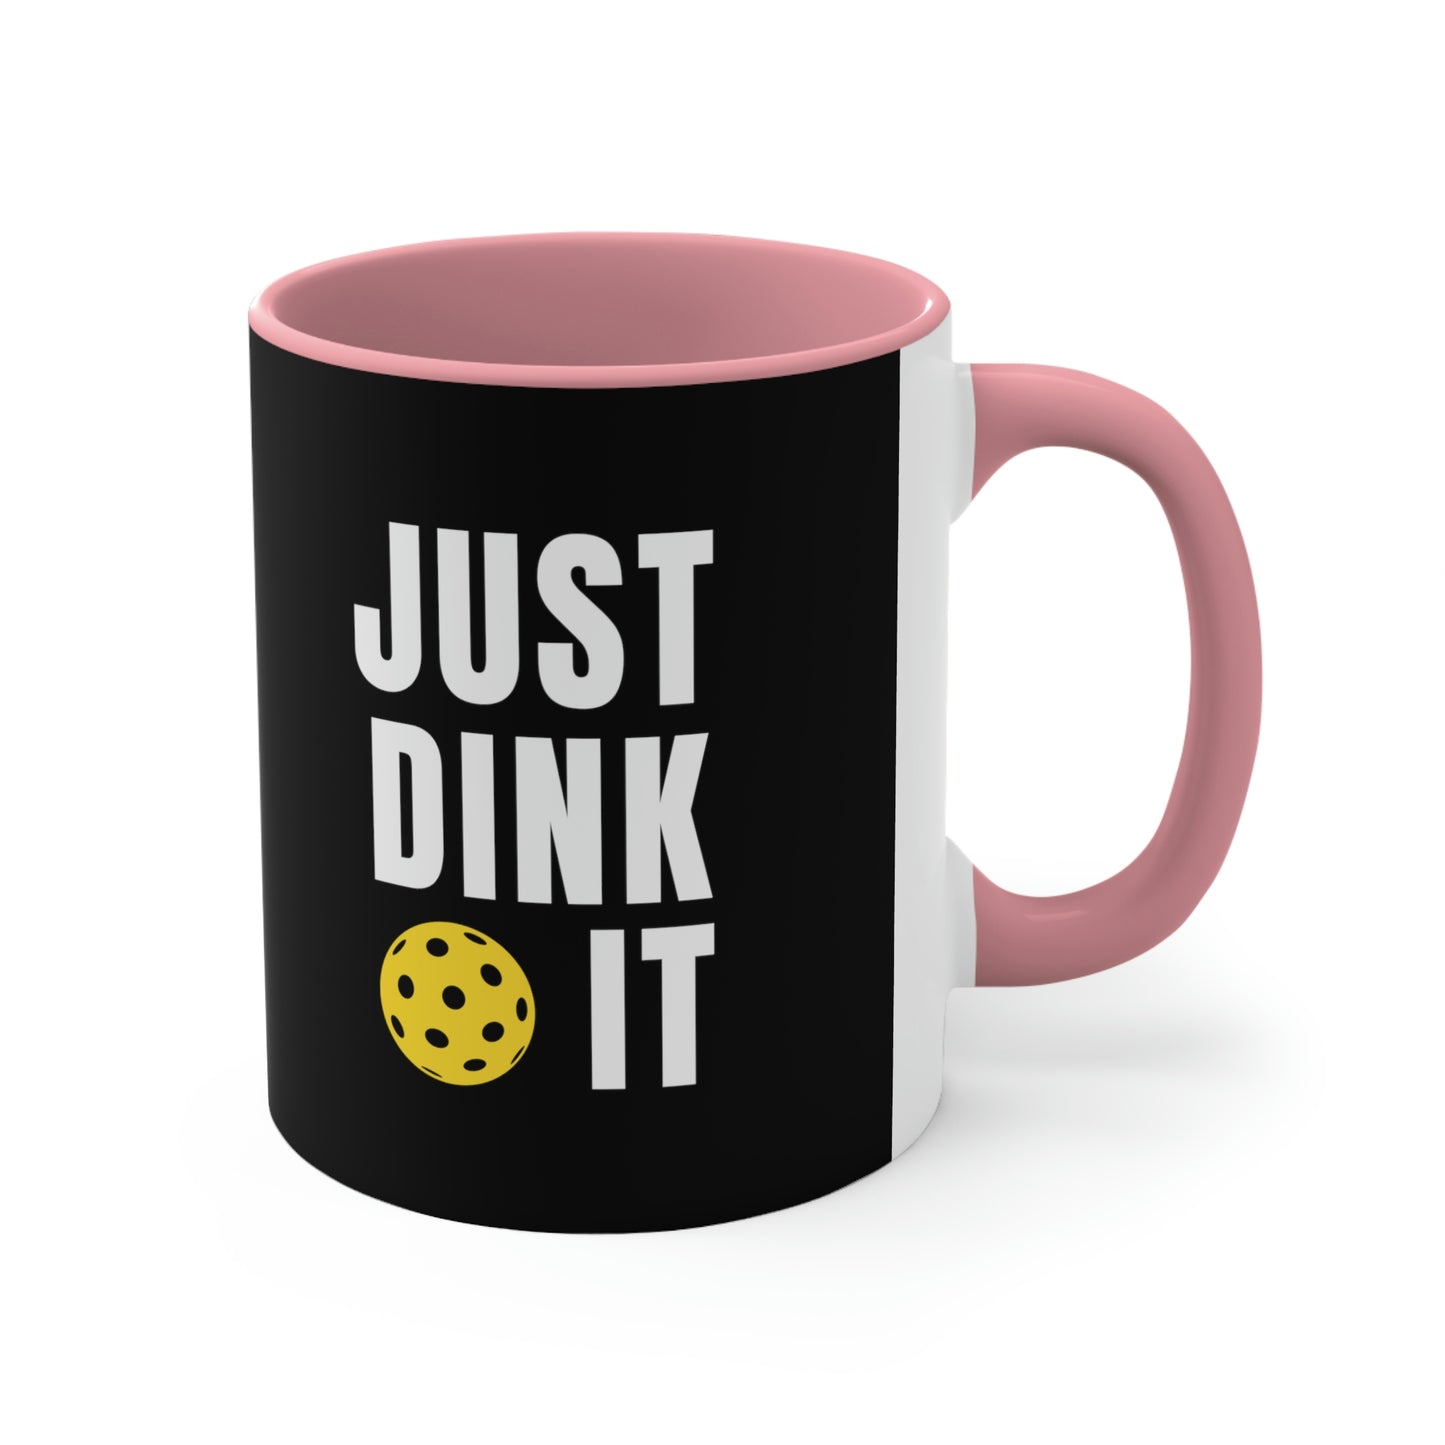 Just Dink it